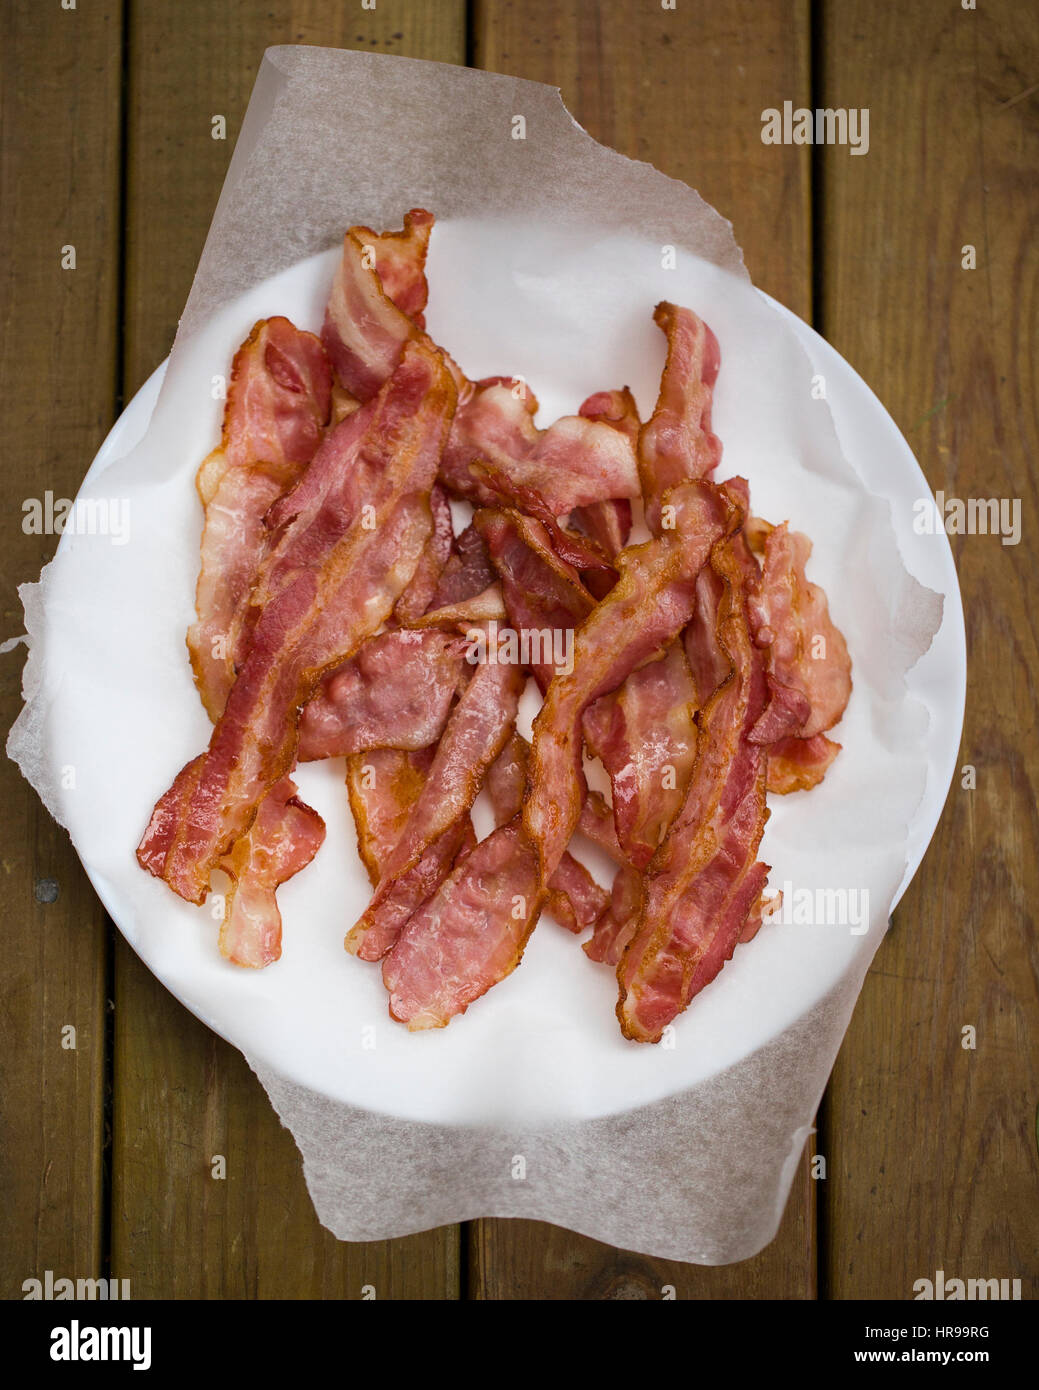 A plate of fried, crispy bacon Stock Photo